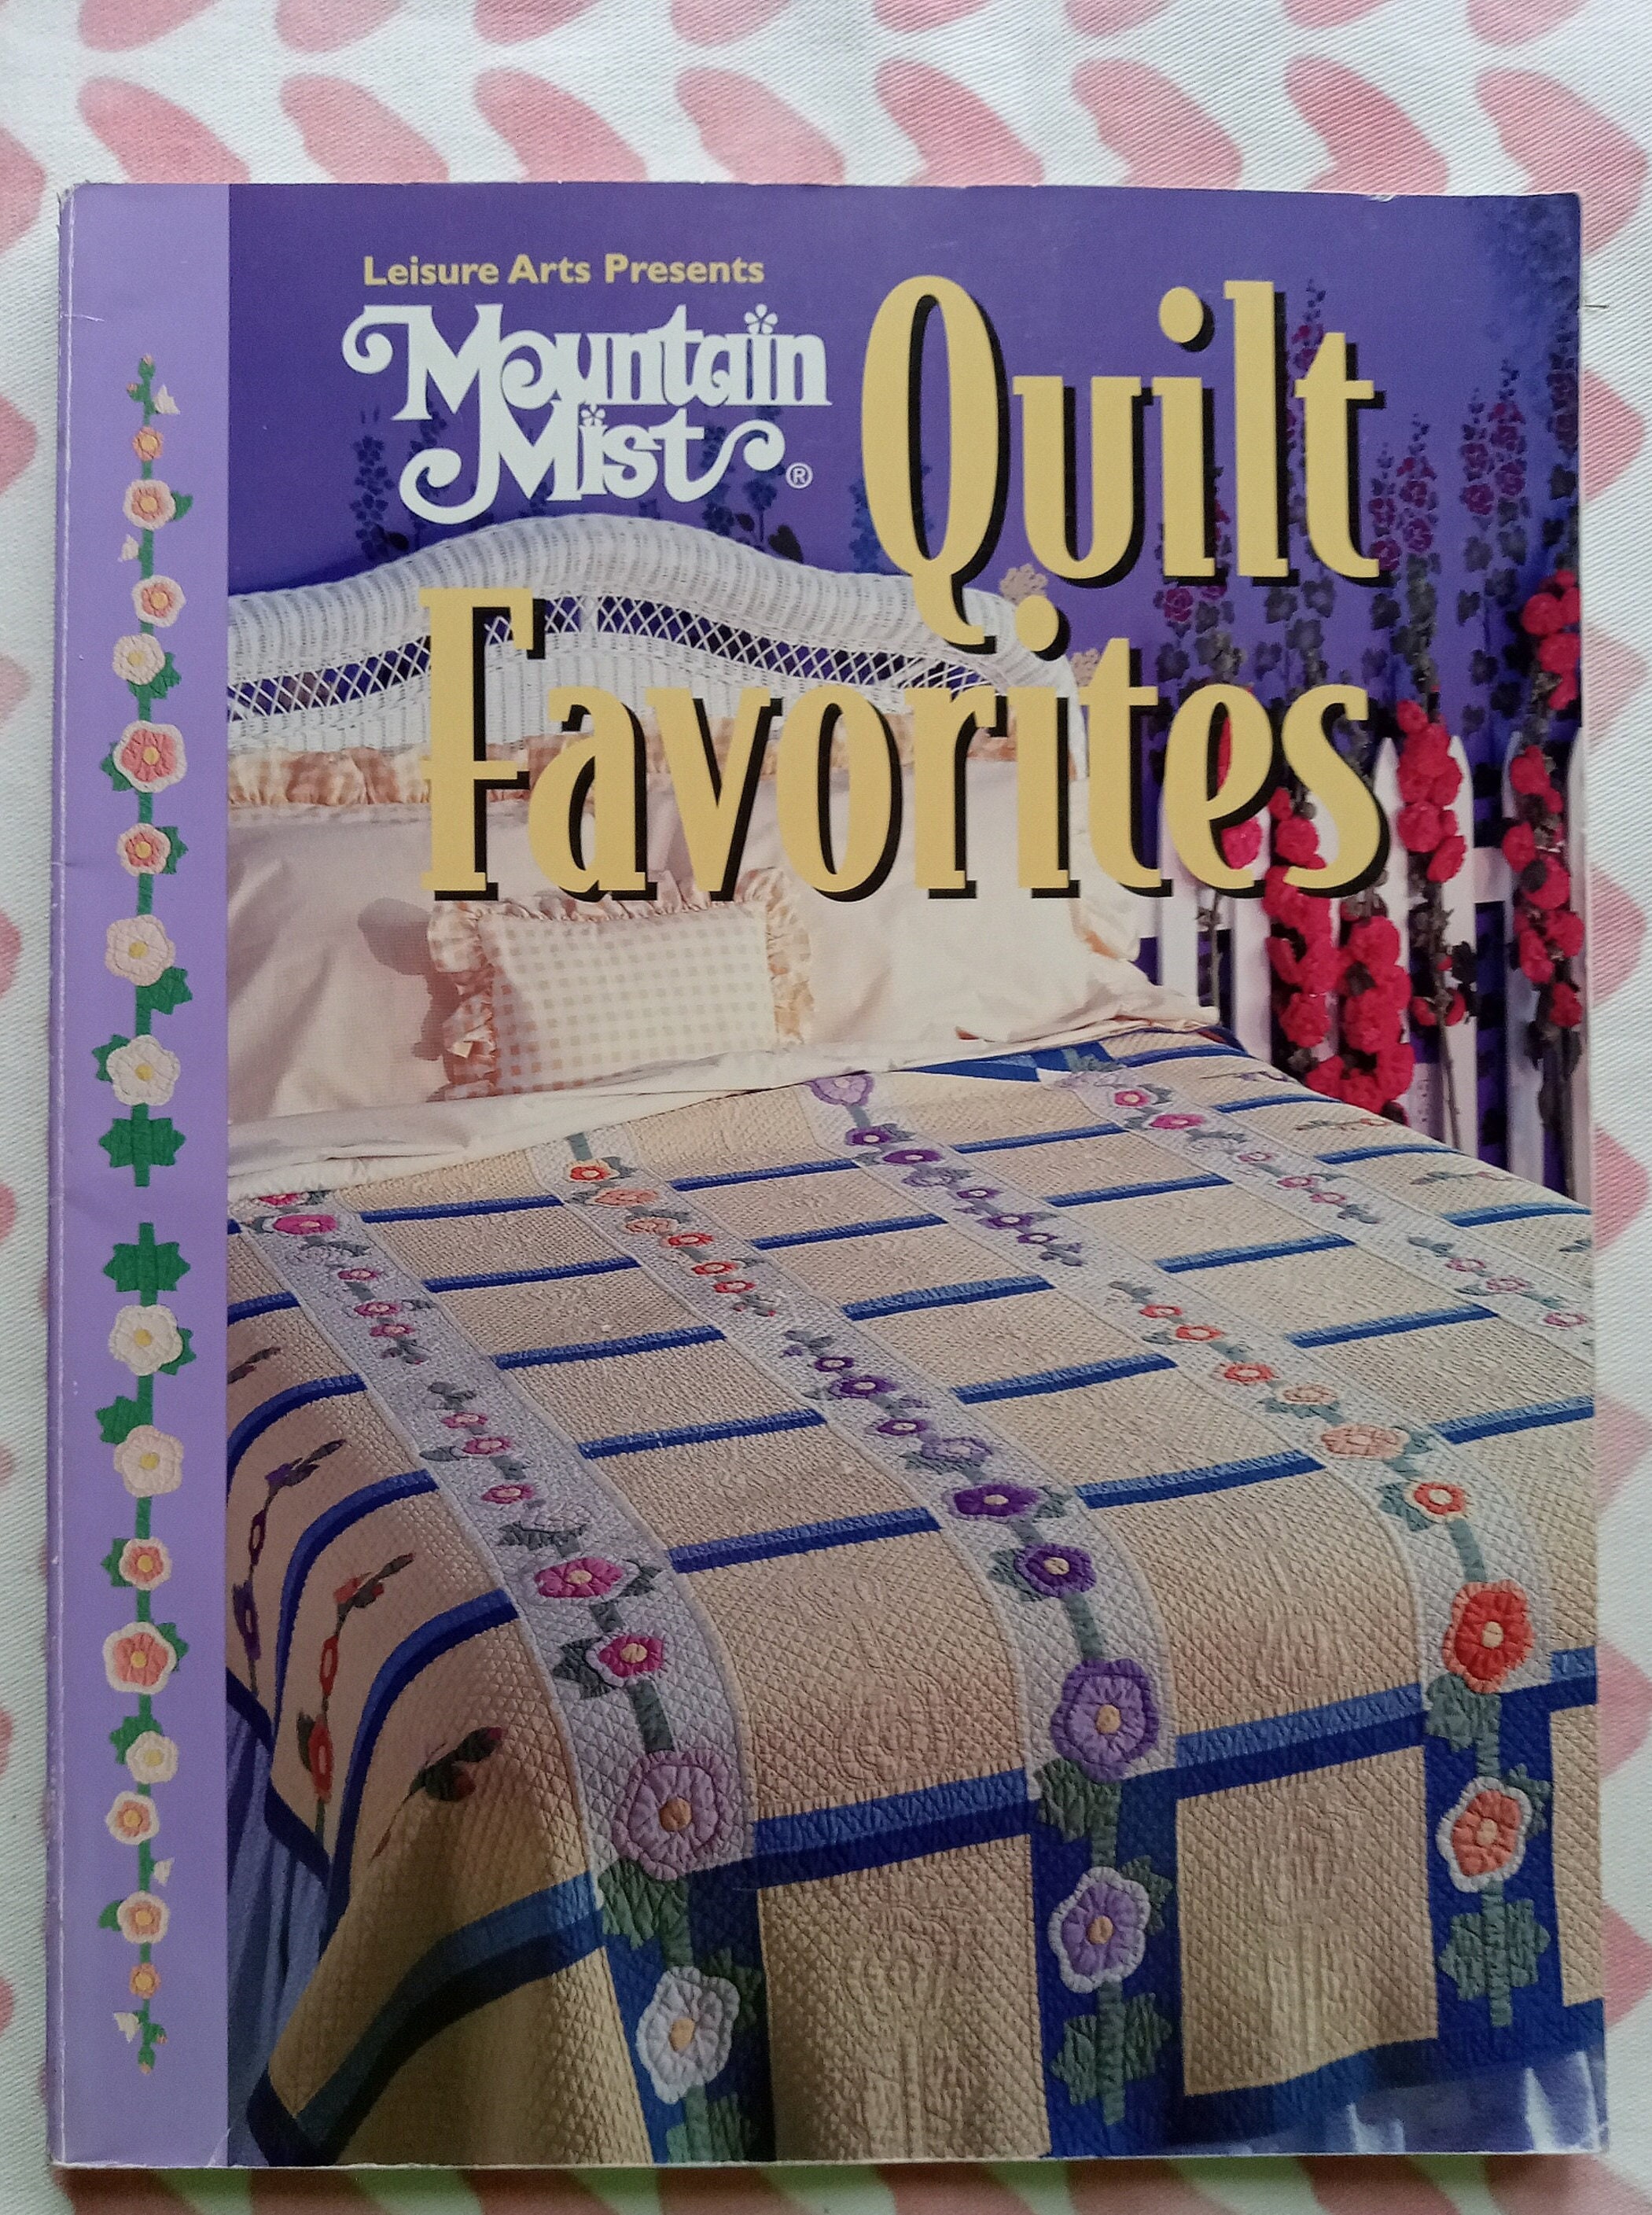 24 Pack Mountain Mist Quilt-Light Polyester Batting-Crib Size 45